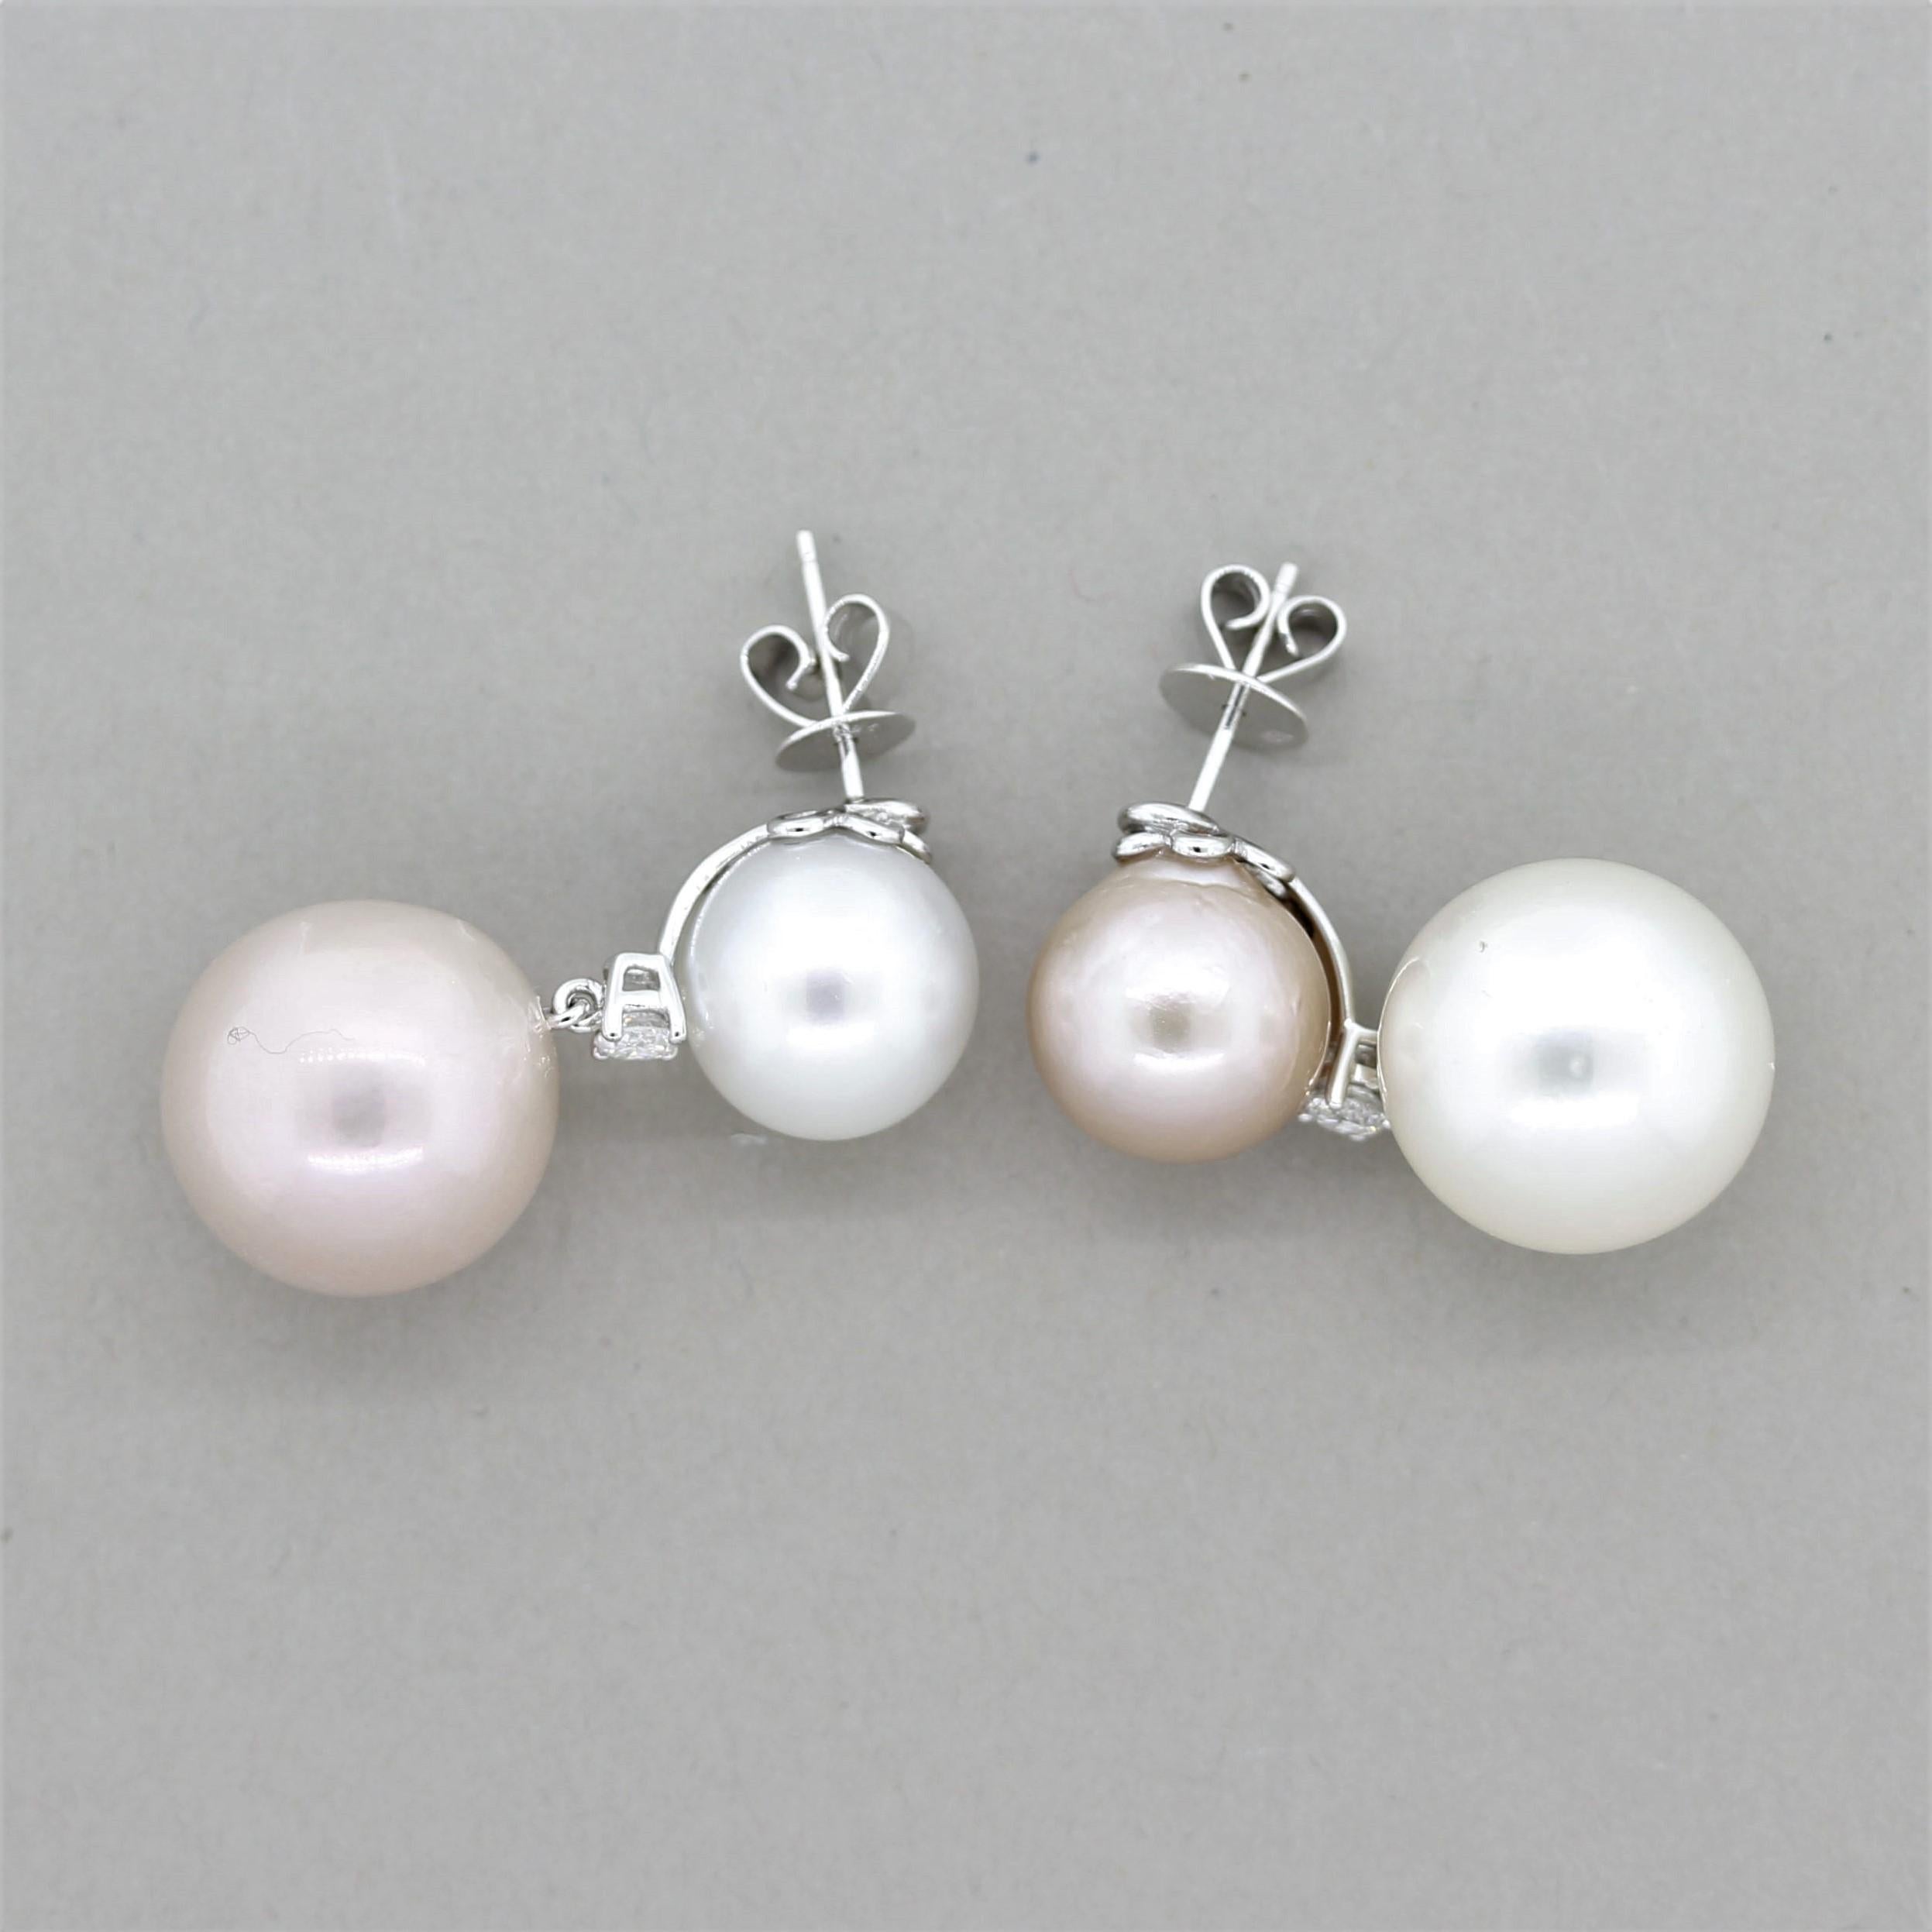 pinkish white south sea pearl